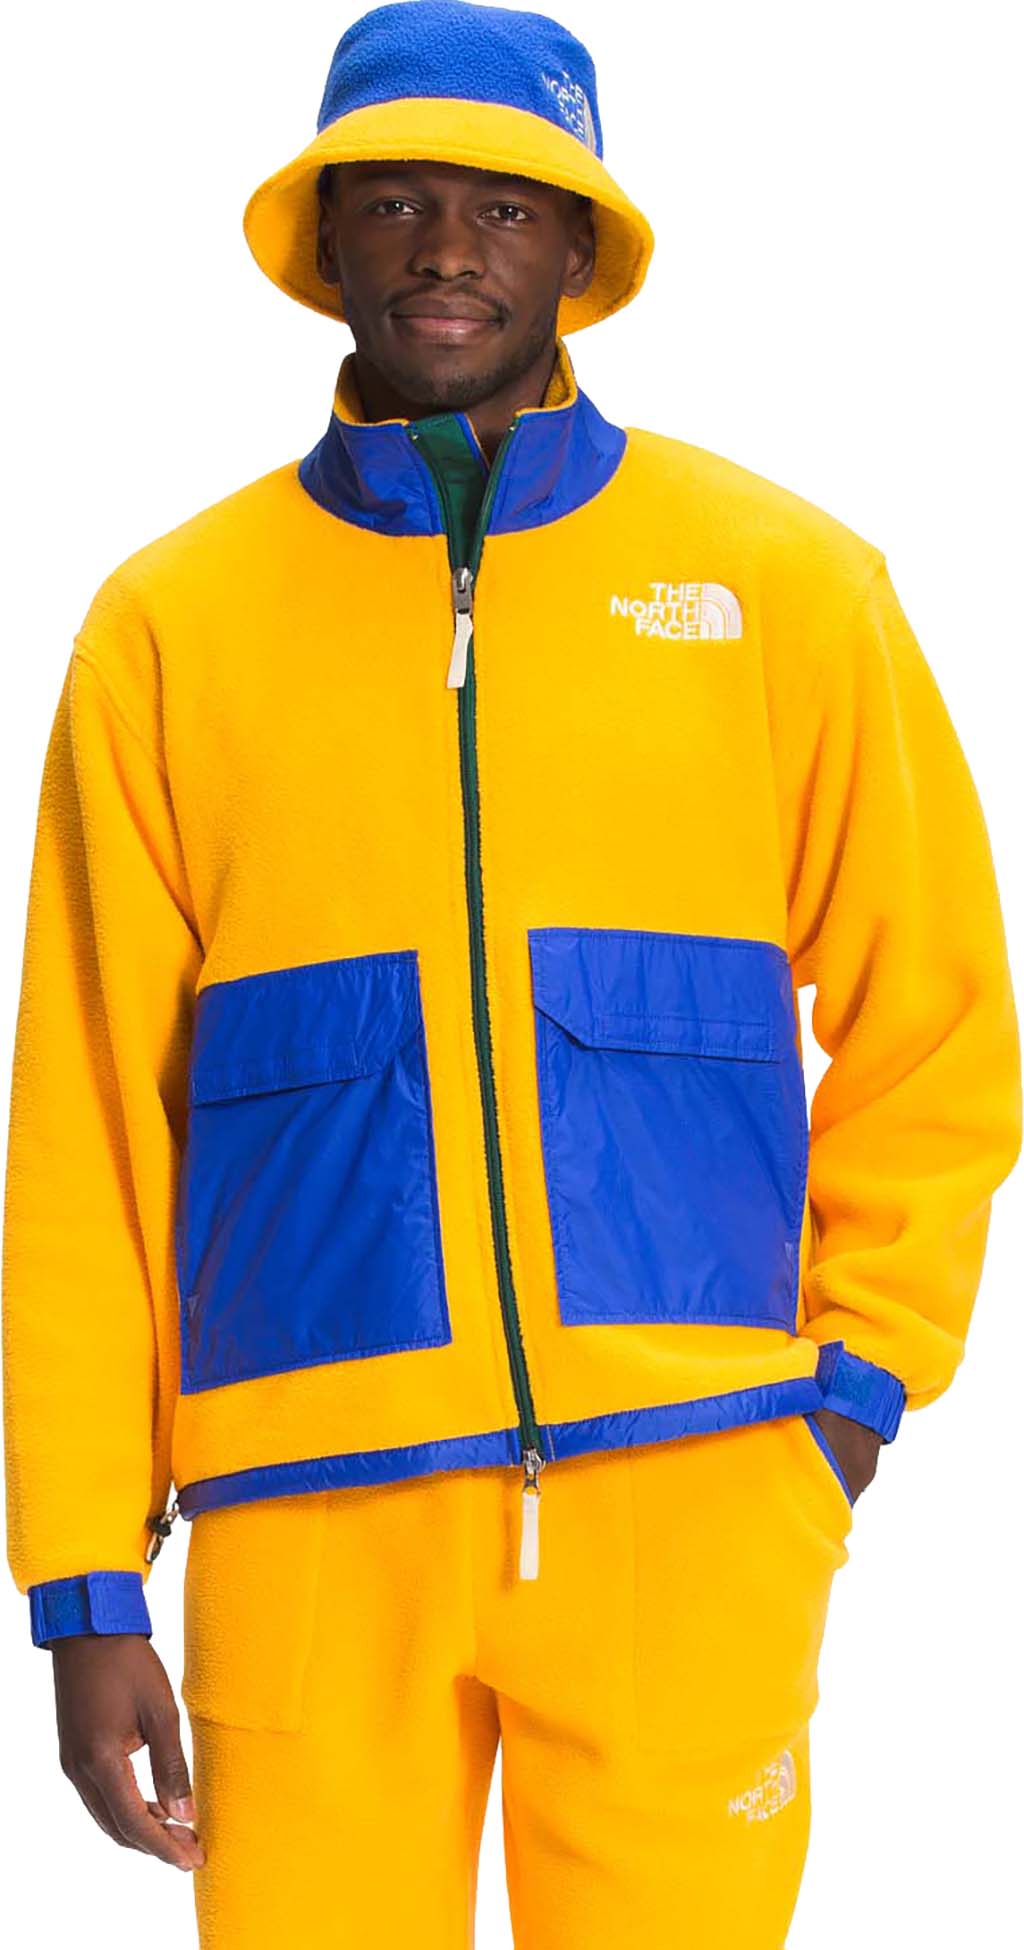 The North Face Colorblock Fleece Jacket - Men's